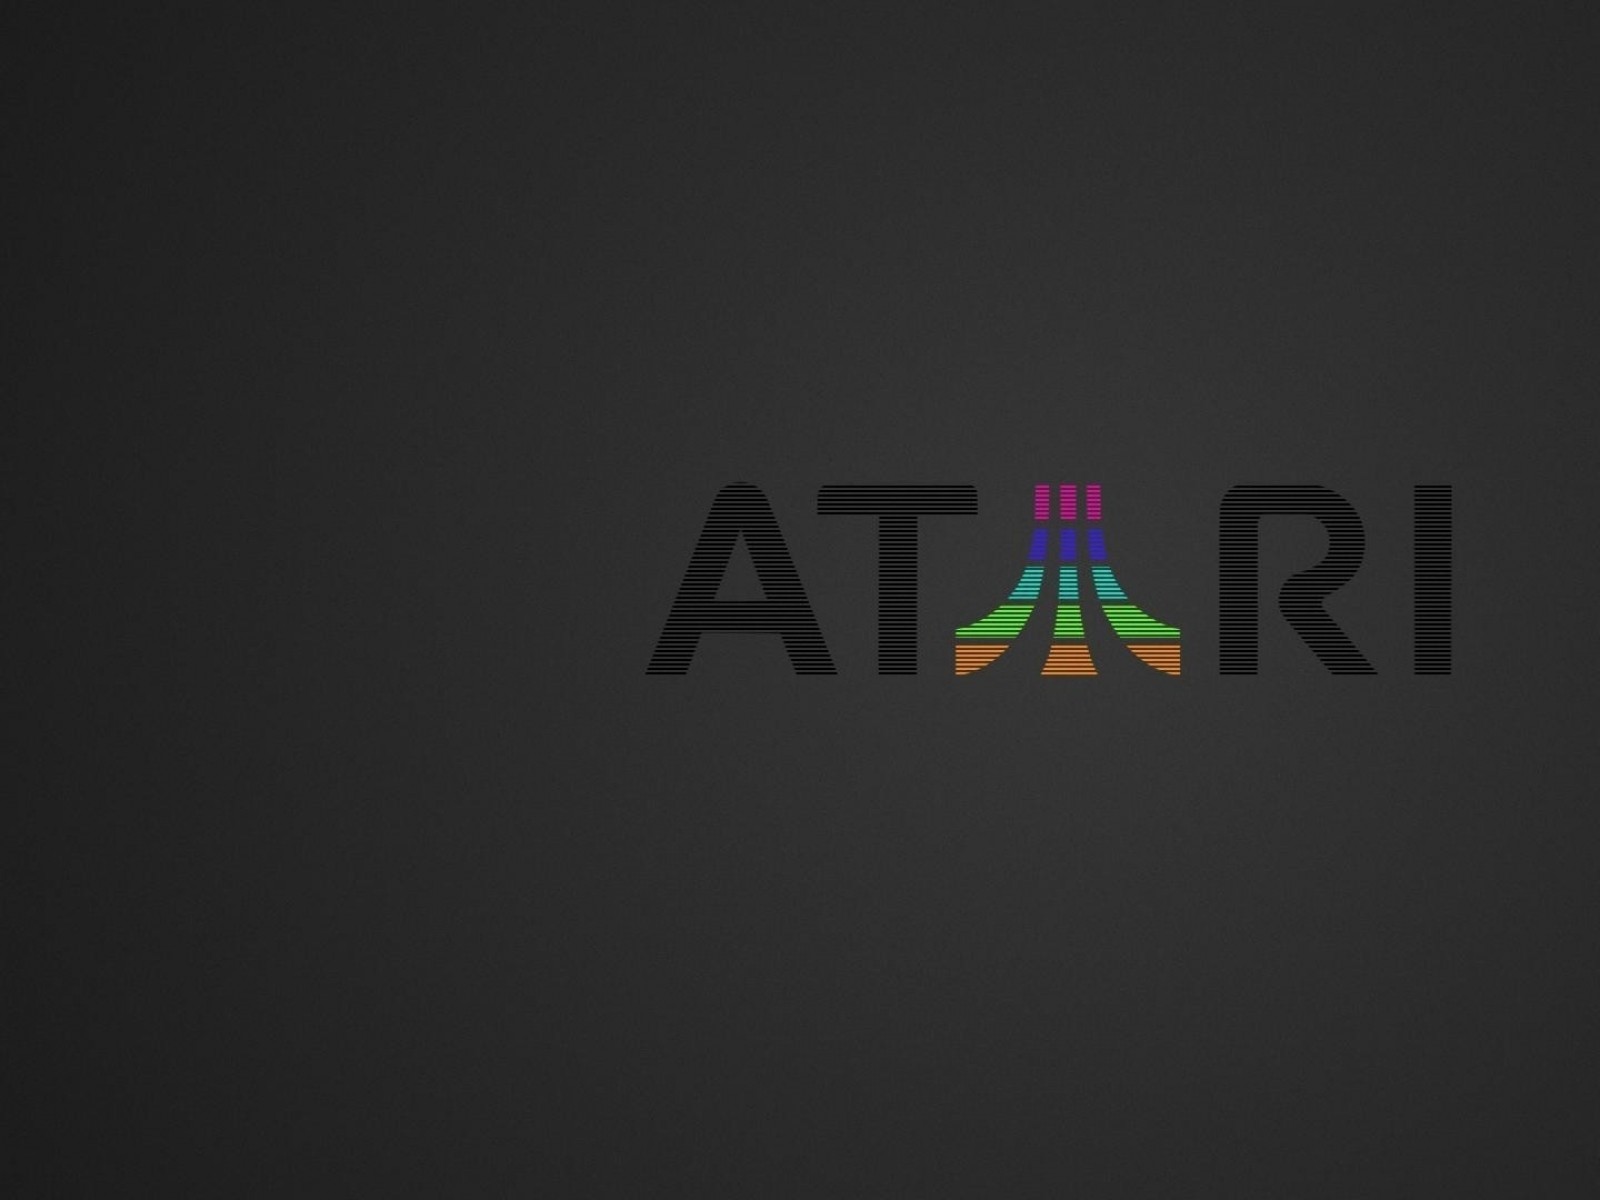 Video Game Atari HD Wallpaper | Background Image